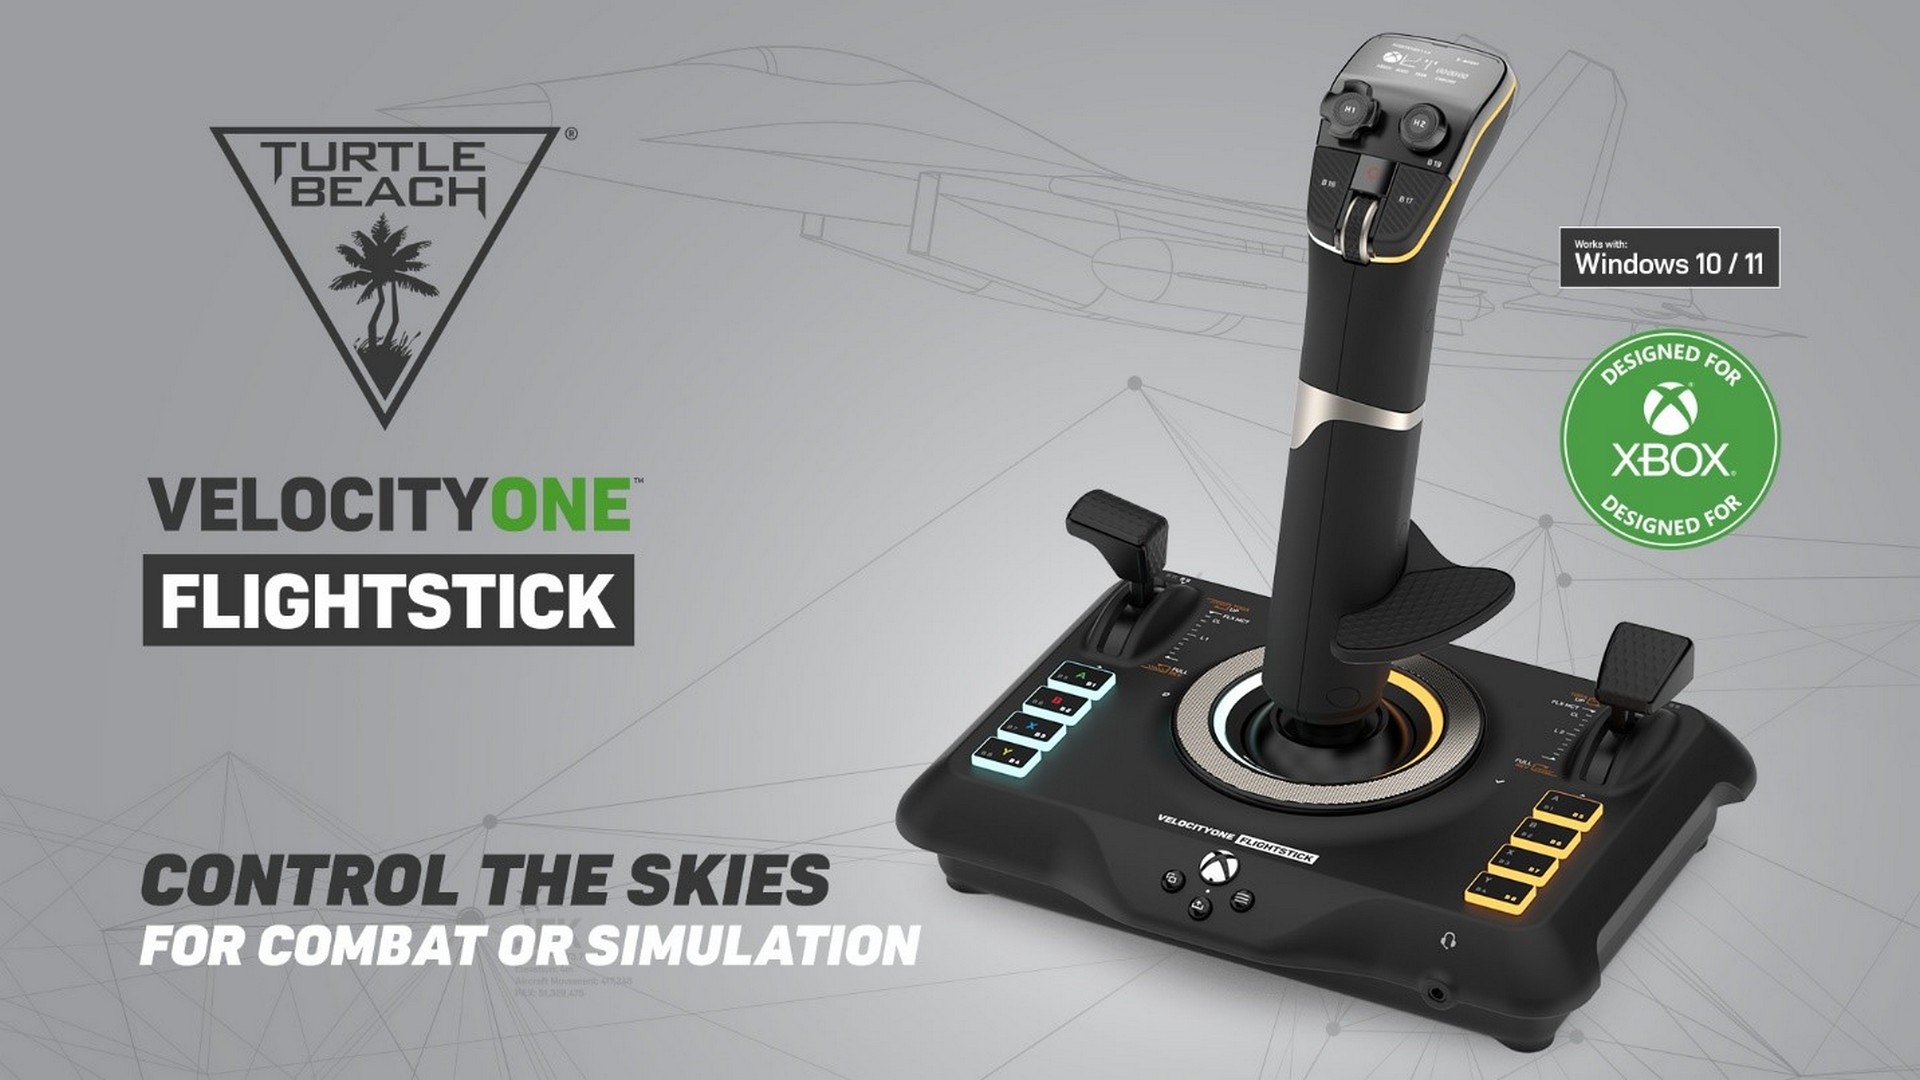 Take Flight & Go Full Maverick With Turtle Beach’s All-New Designed For Xbox VelocityOne Flightstick